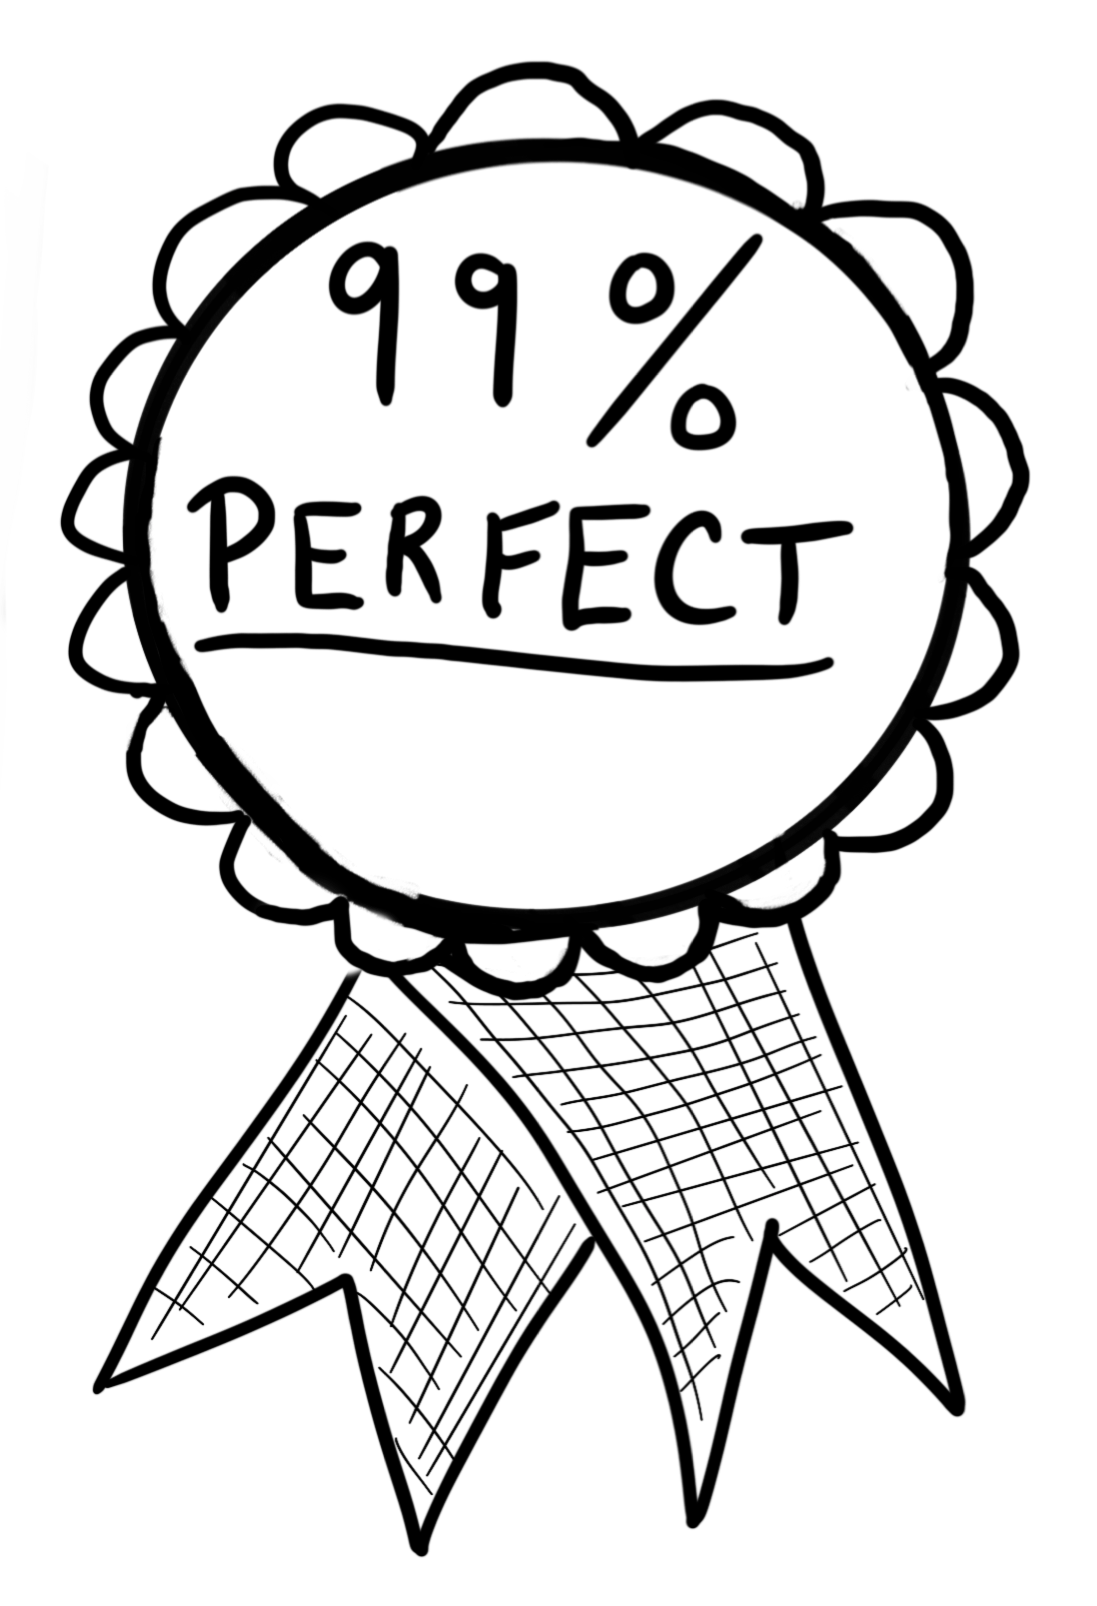 Hand-drawn award ribbon icon that says '99-percent perfect' on it.